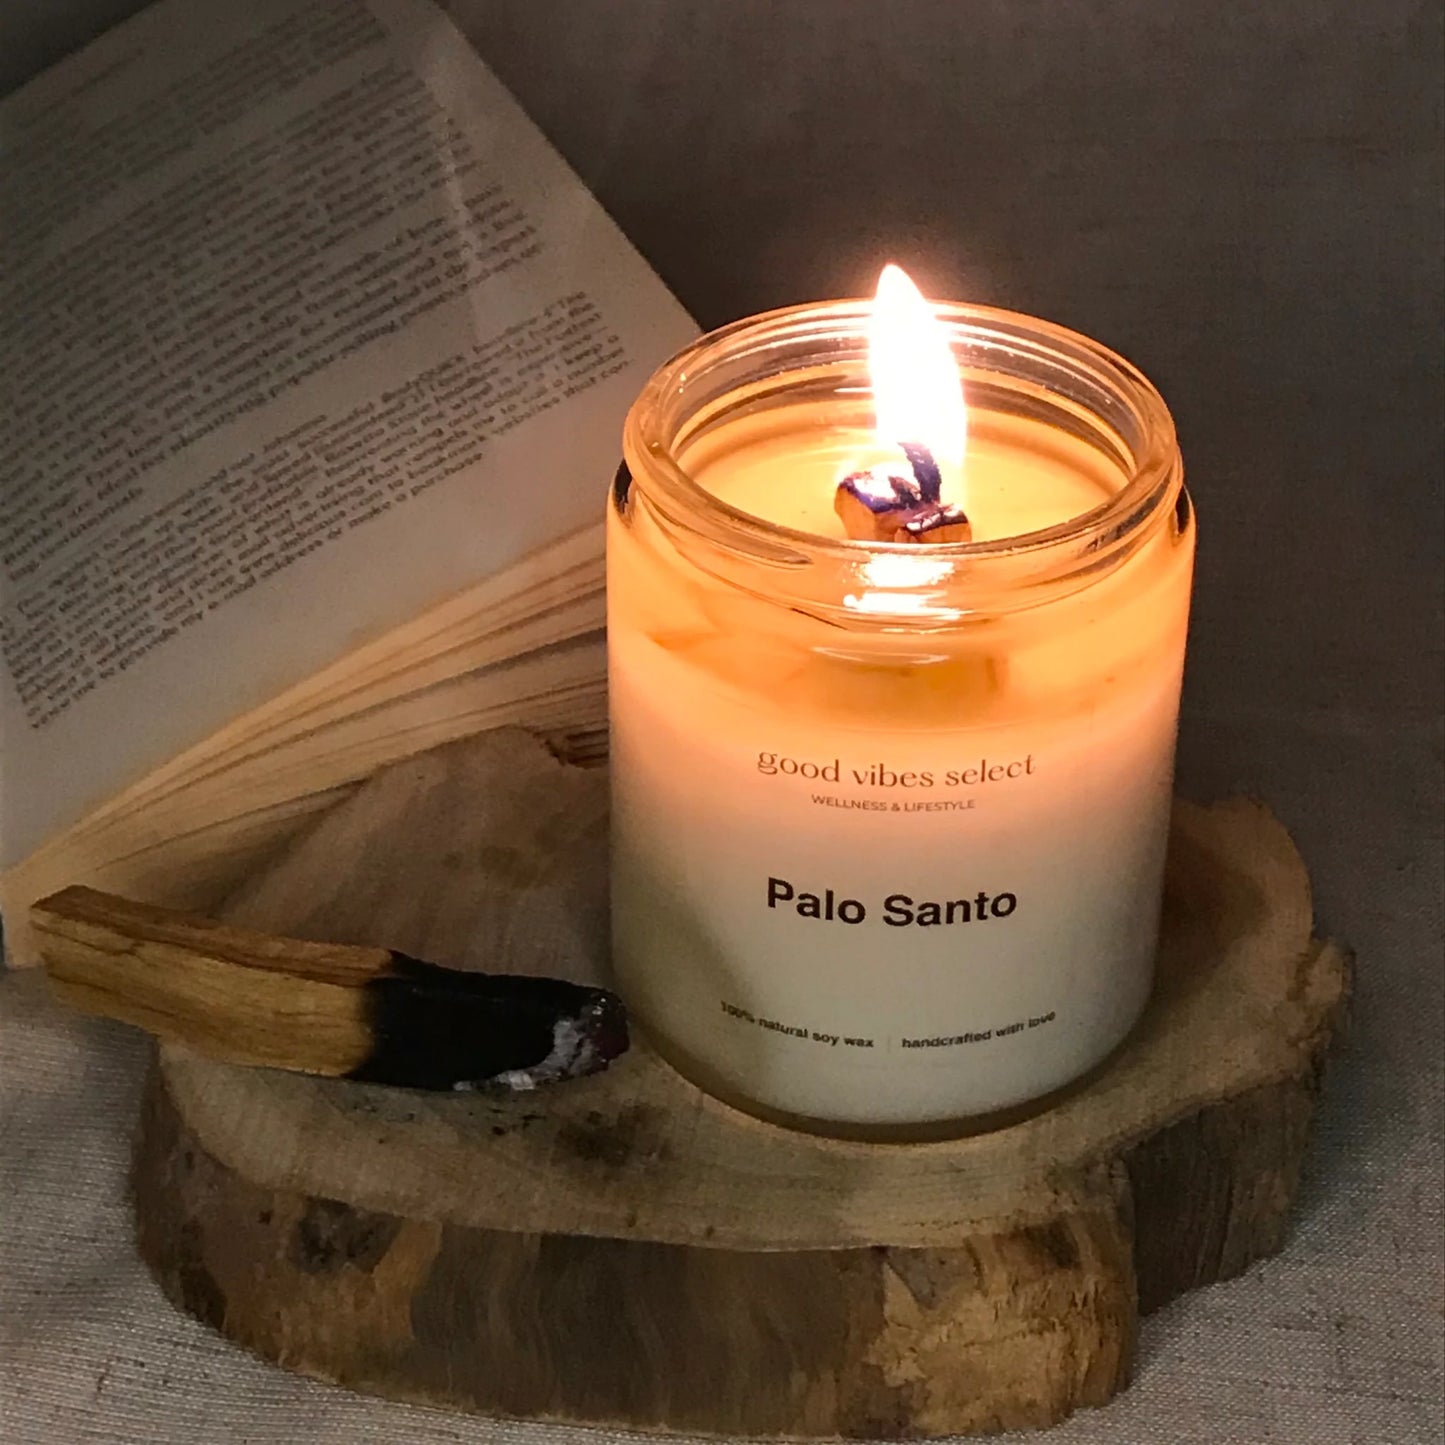 Good Vibes Select 秘魯聖木蠟燭 - 聖木蠟燭芯 Palo Santo with Palo Santo Wick Candle